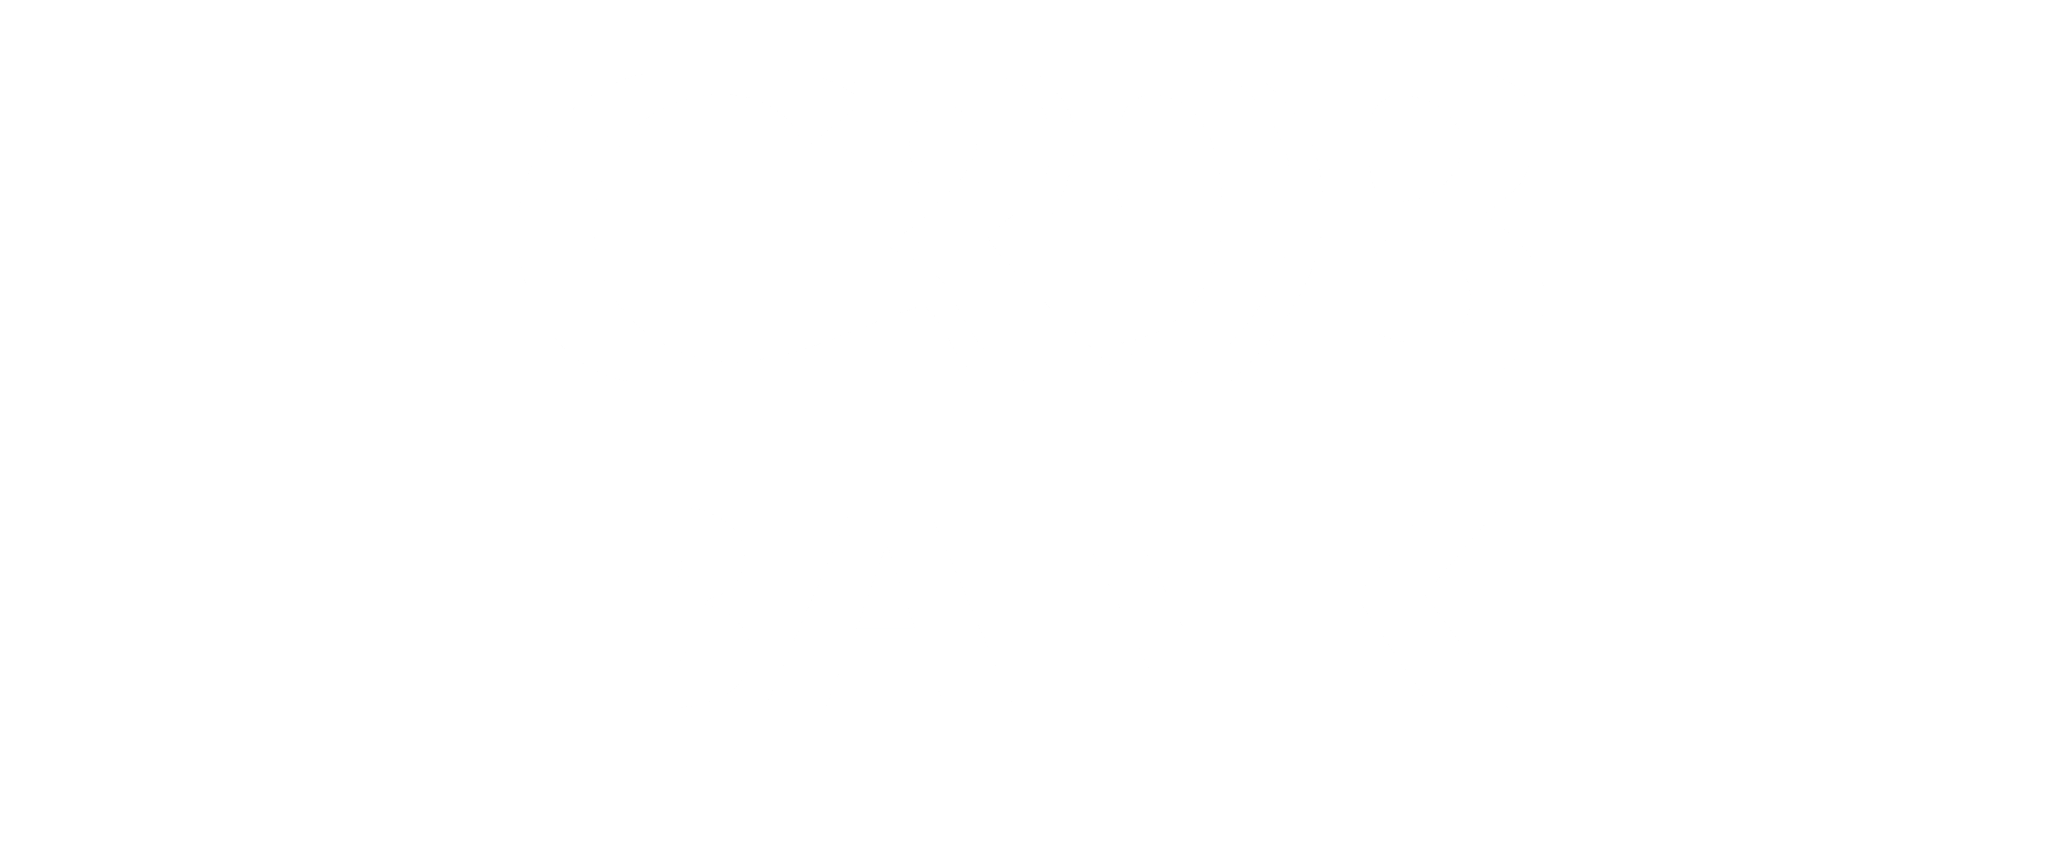 CRDB Bank Marathon Logo White